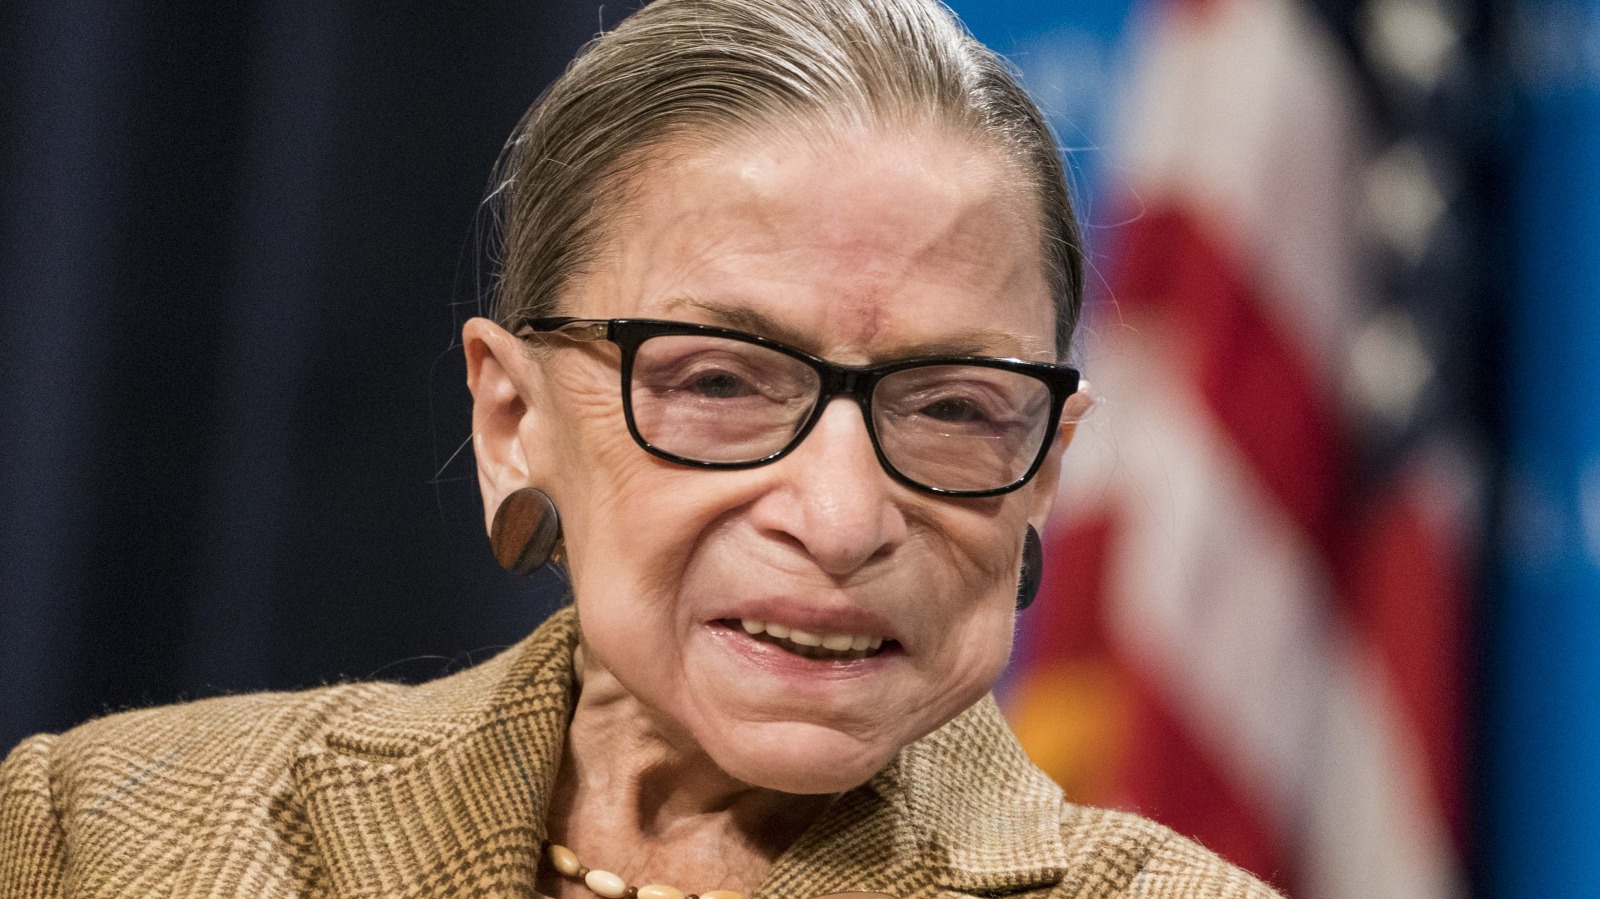 The tragic death of Ruth Bader Ginsburg